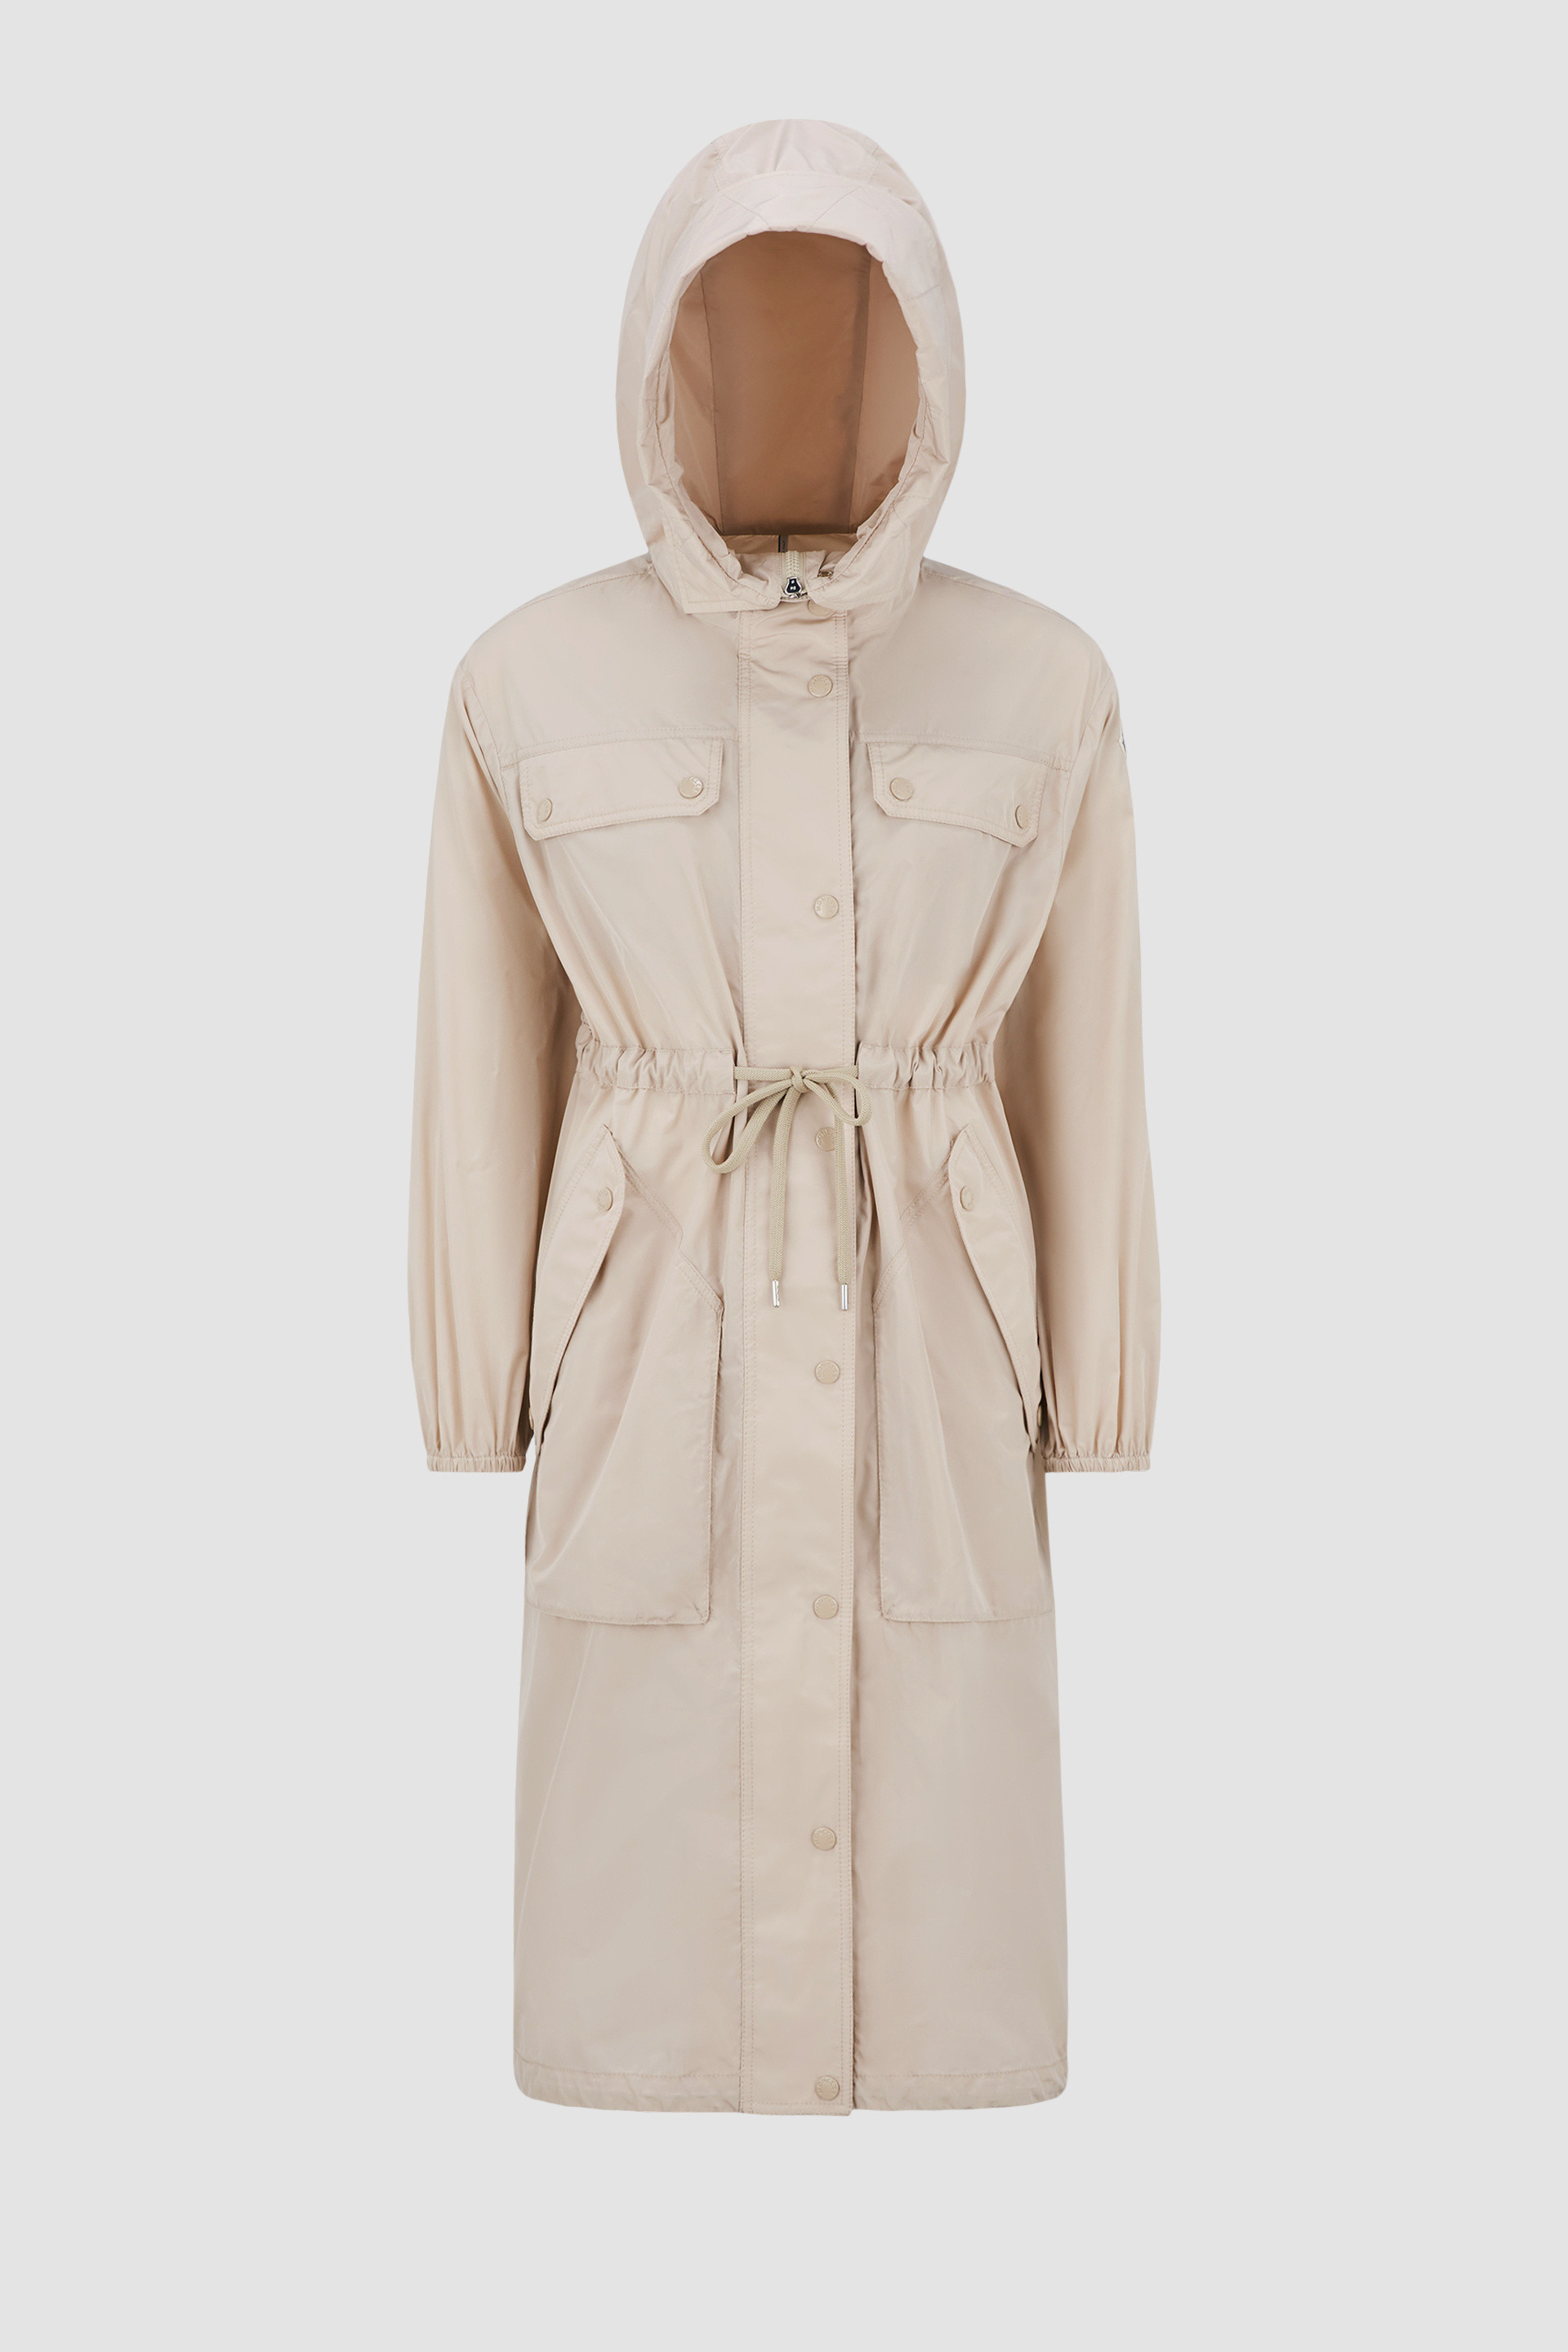 Coats for Women - Trench Coats, Raincoats & Parkas | Moncler US